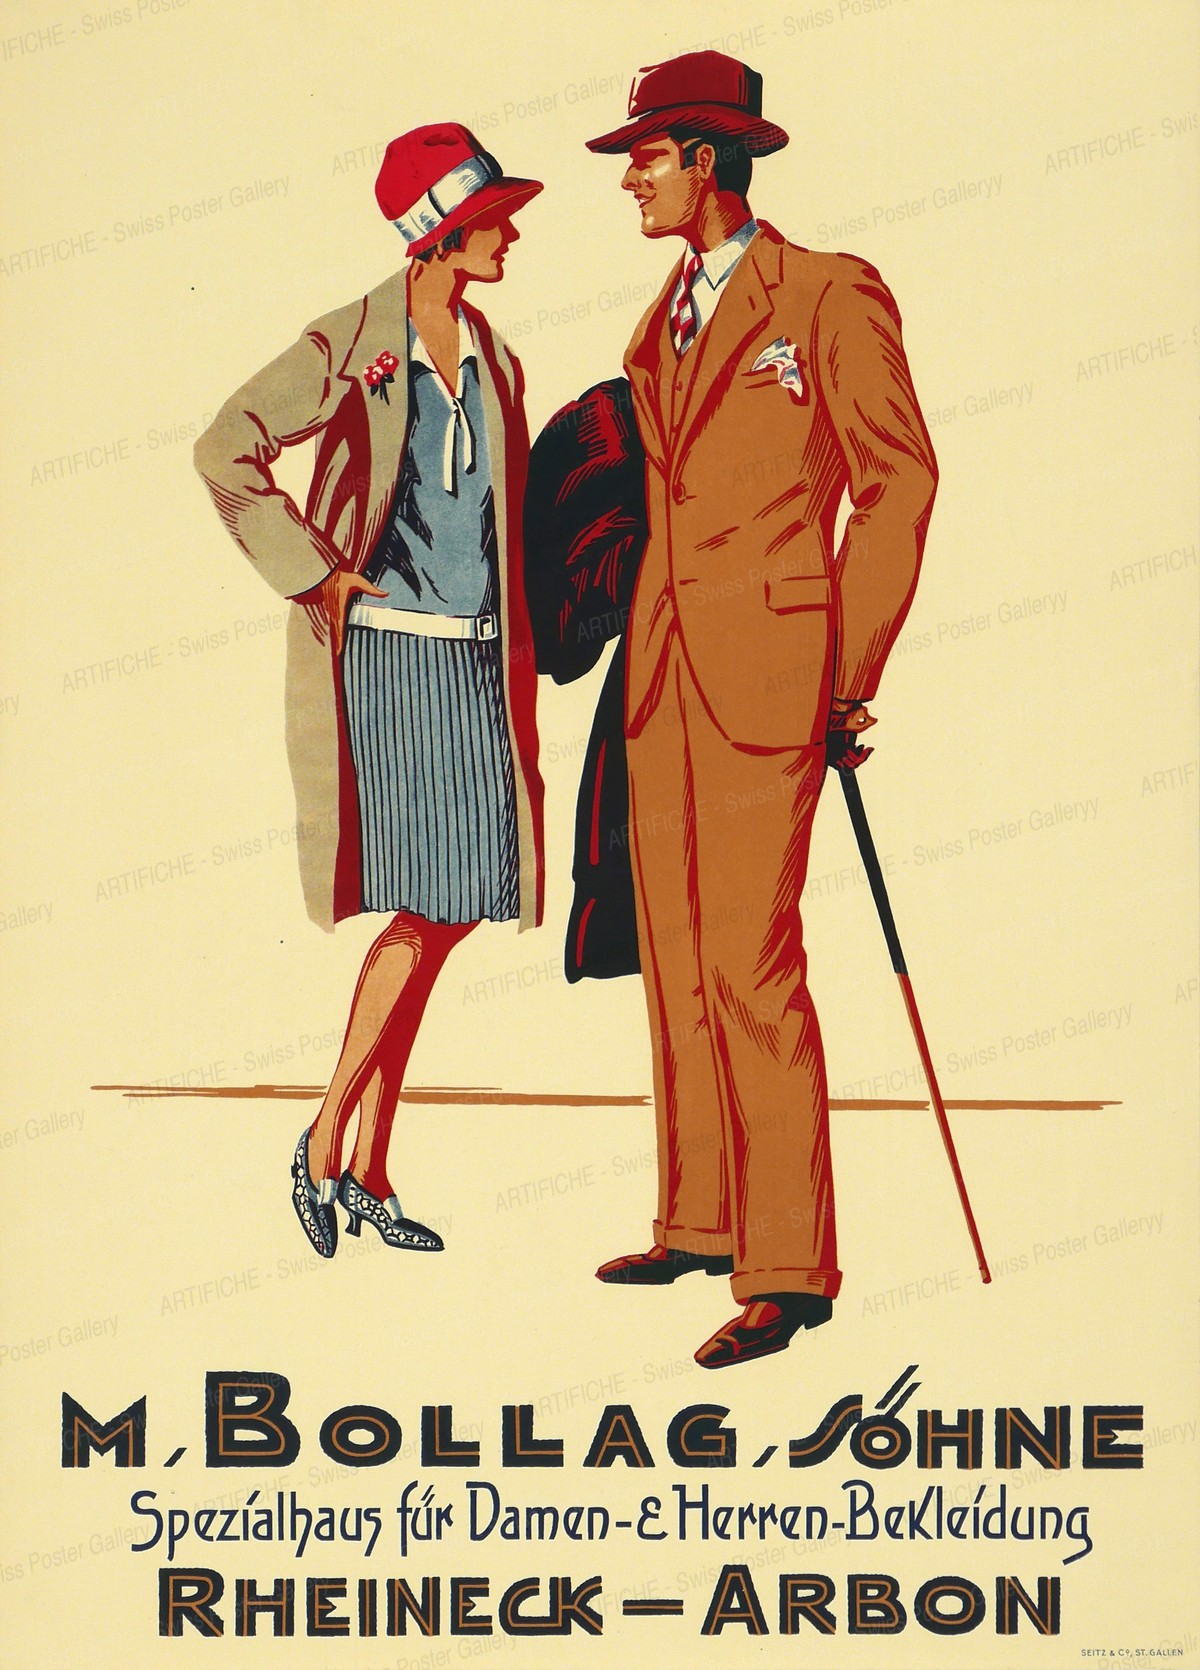 M. Bollag sons – women’s and men’s clothing Rheineck-Arbon, Artist unknown